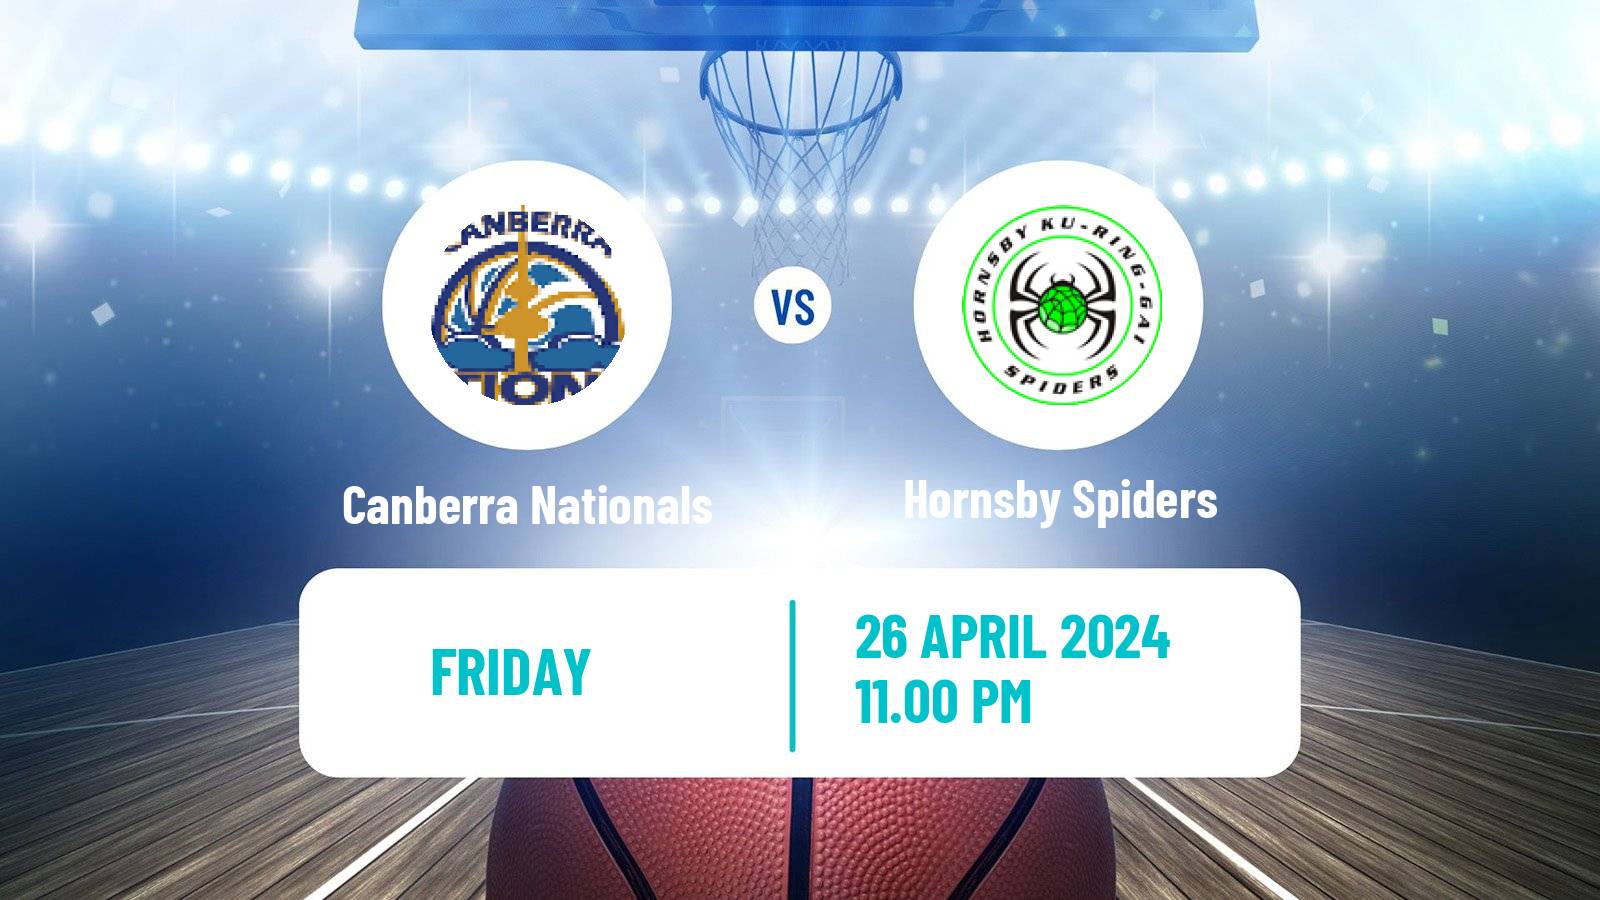 Basketball Australian NBL1 East Women Canberra Nationals - Hornsby Spiders